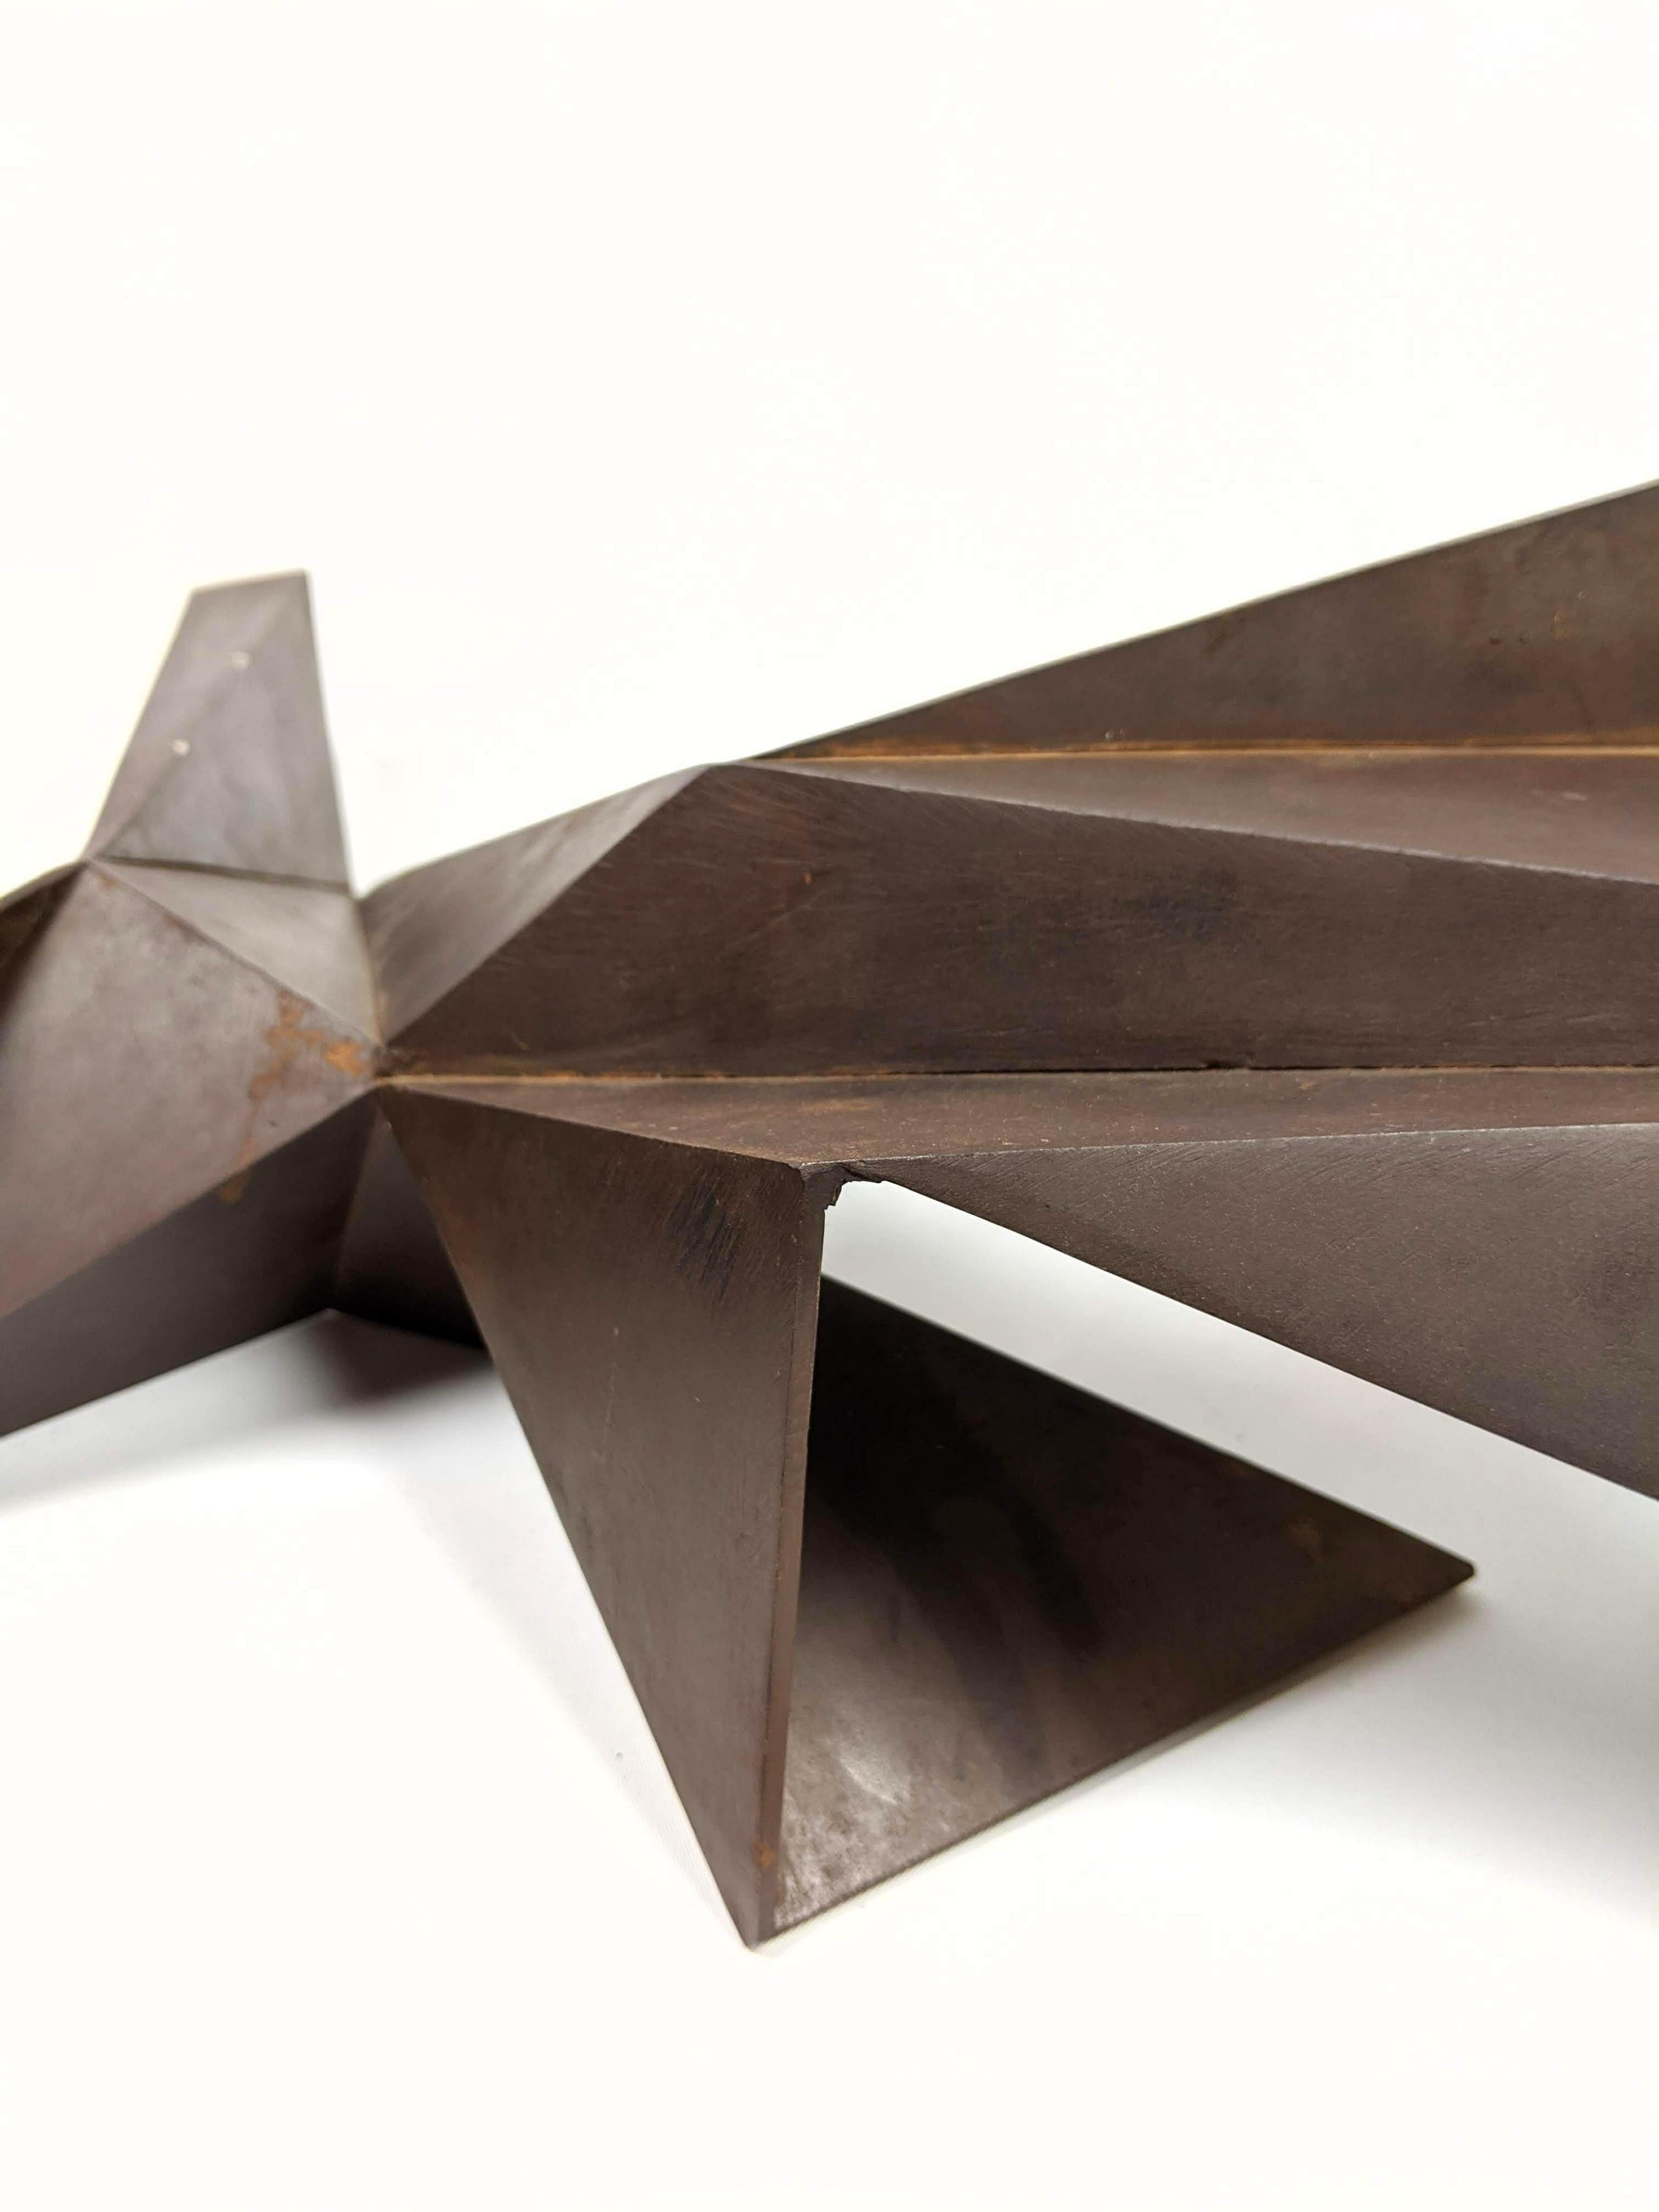 Corten Steel Abstract Geometric Folded Origami Sculpture Gerald DiGiusto  4